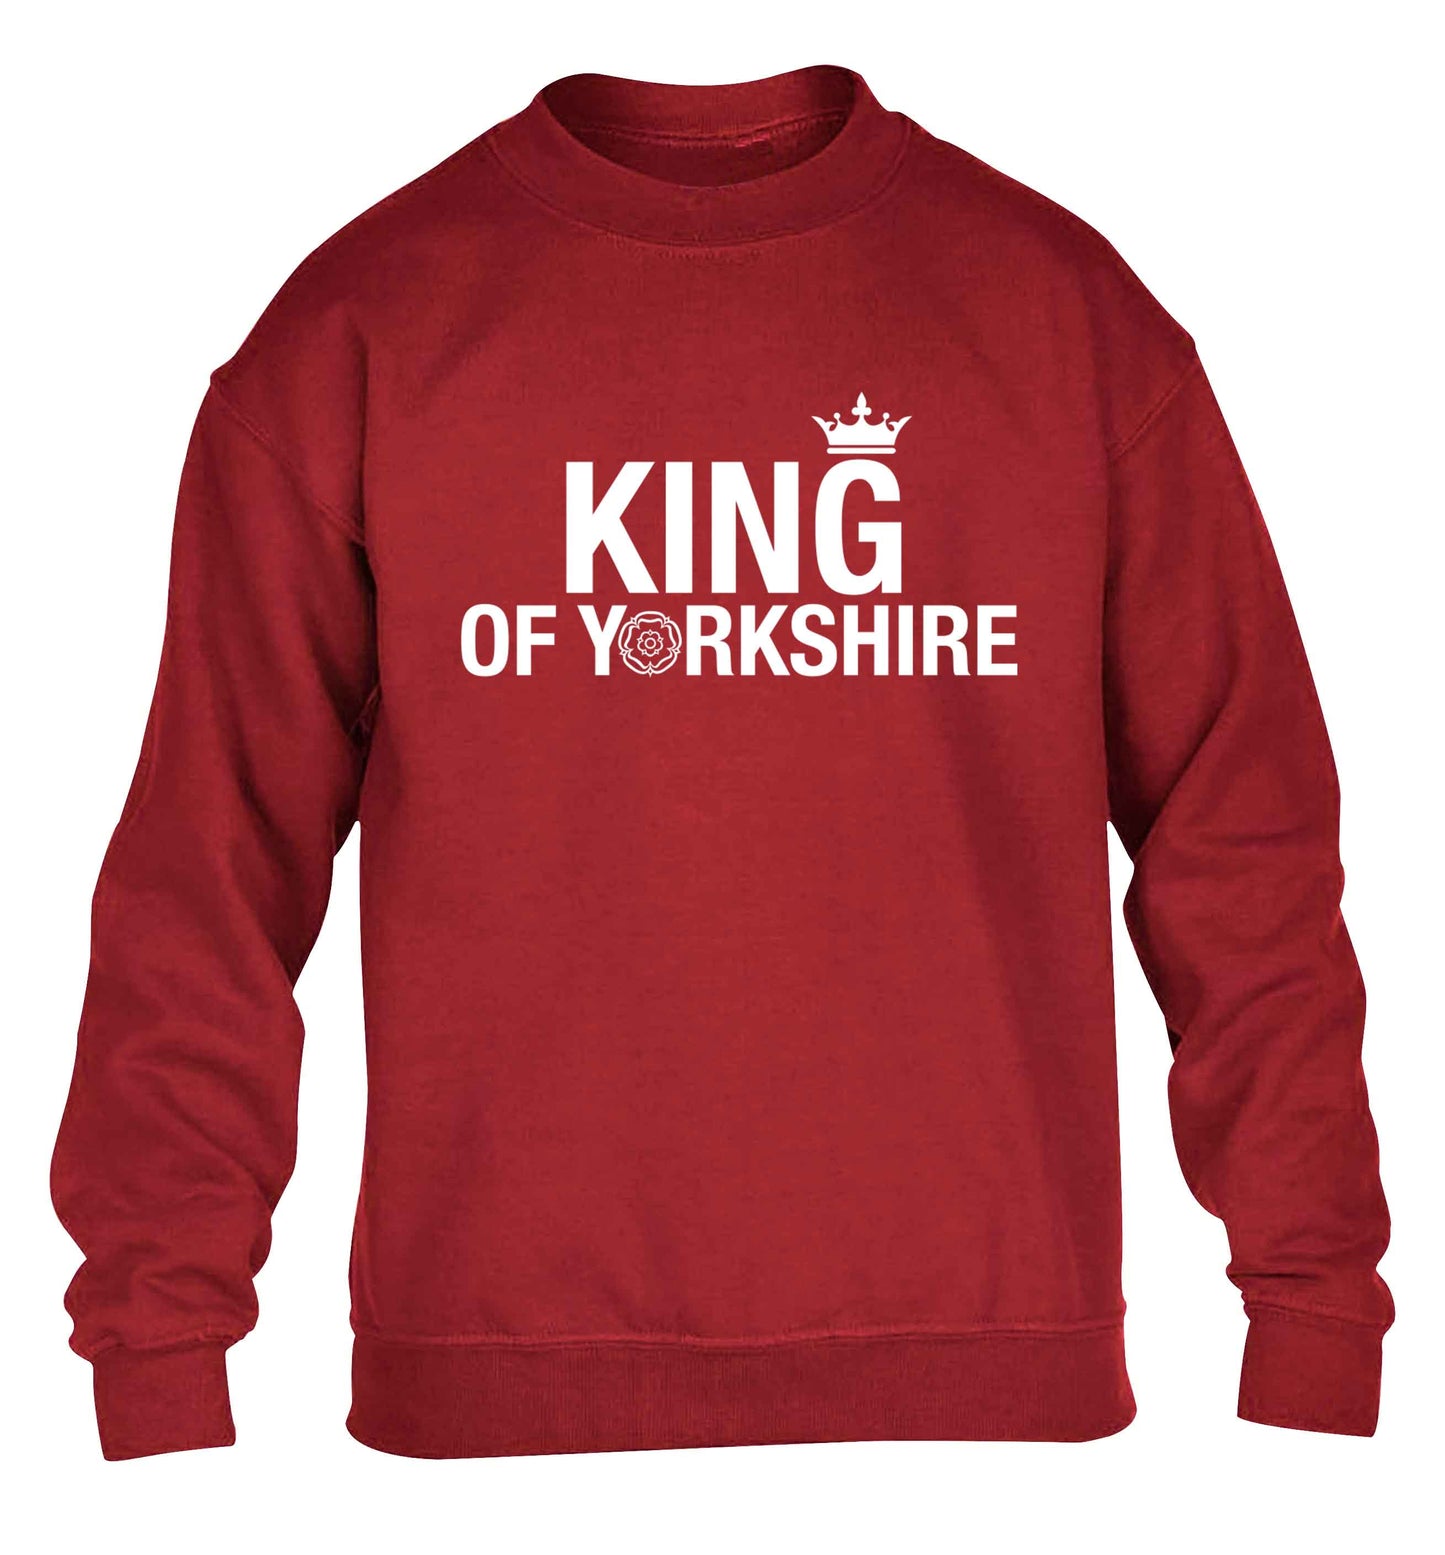 King of Yorkshire children's grey sweater 12-13 Years